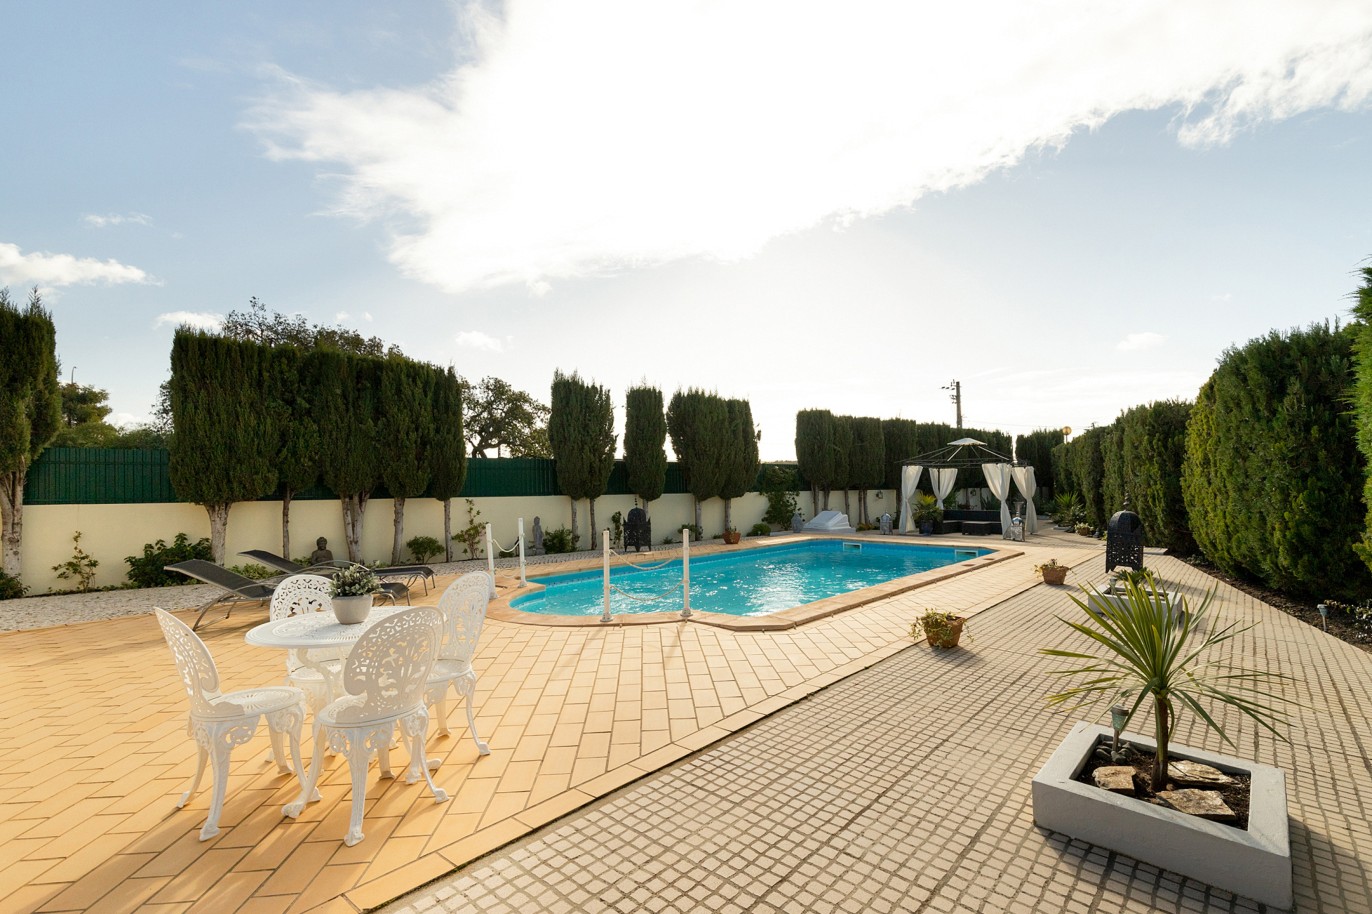 Fantastic 3 bedroom villa with pool, for sale in Algoz, Algarve_215670